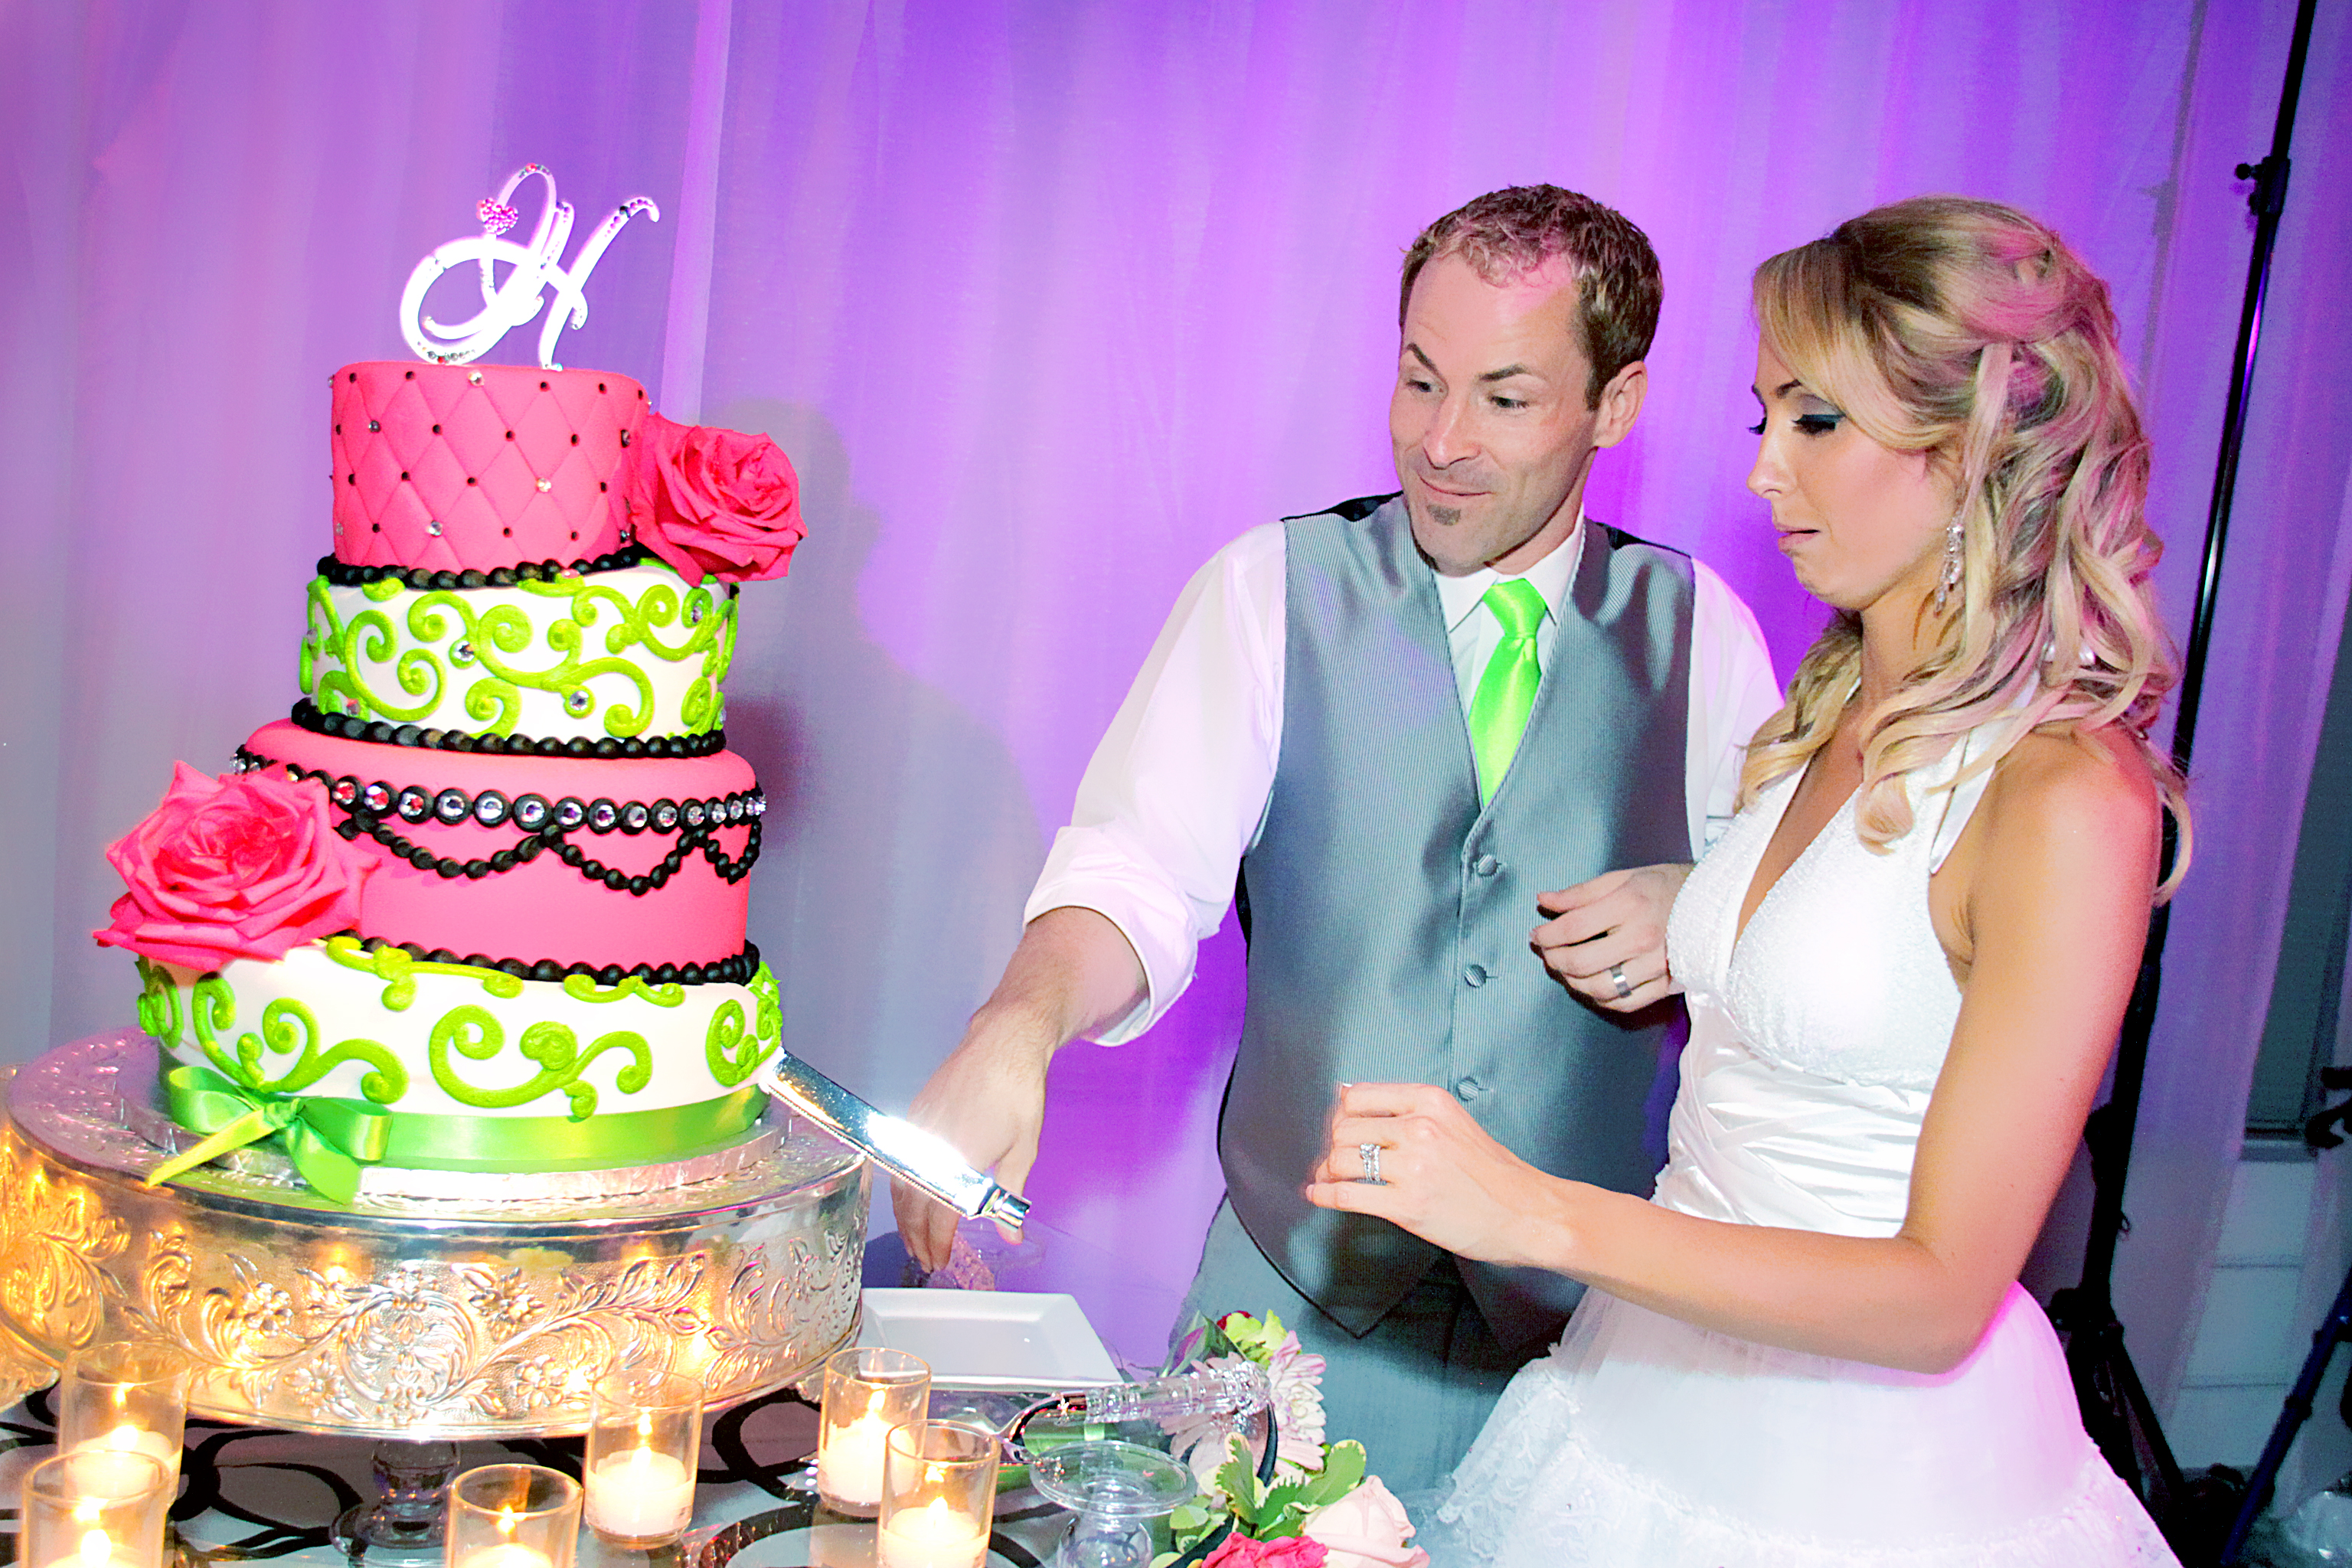 Cake cutter breaks at wedding